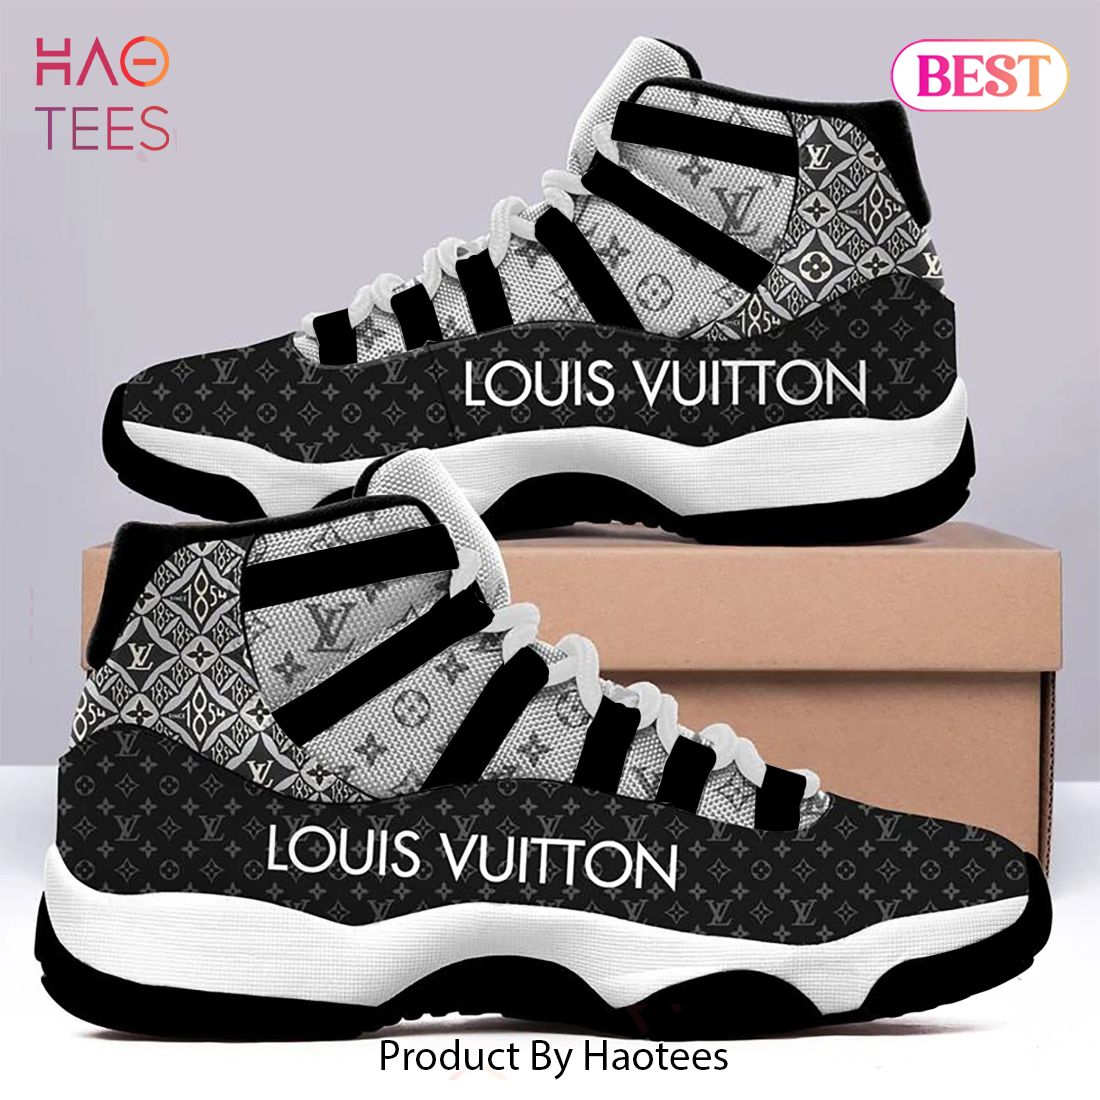 [NEW FASHION] Louis Vuitton Air Jordan 11 Sneakers Shoes Hot 2023 LV Grey Gifts For Men Women